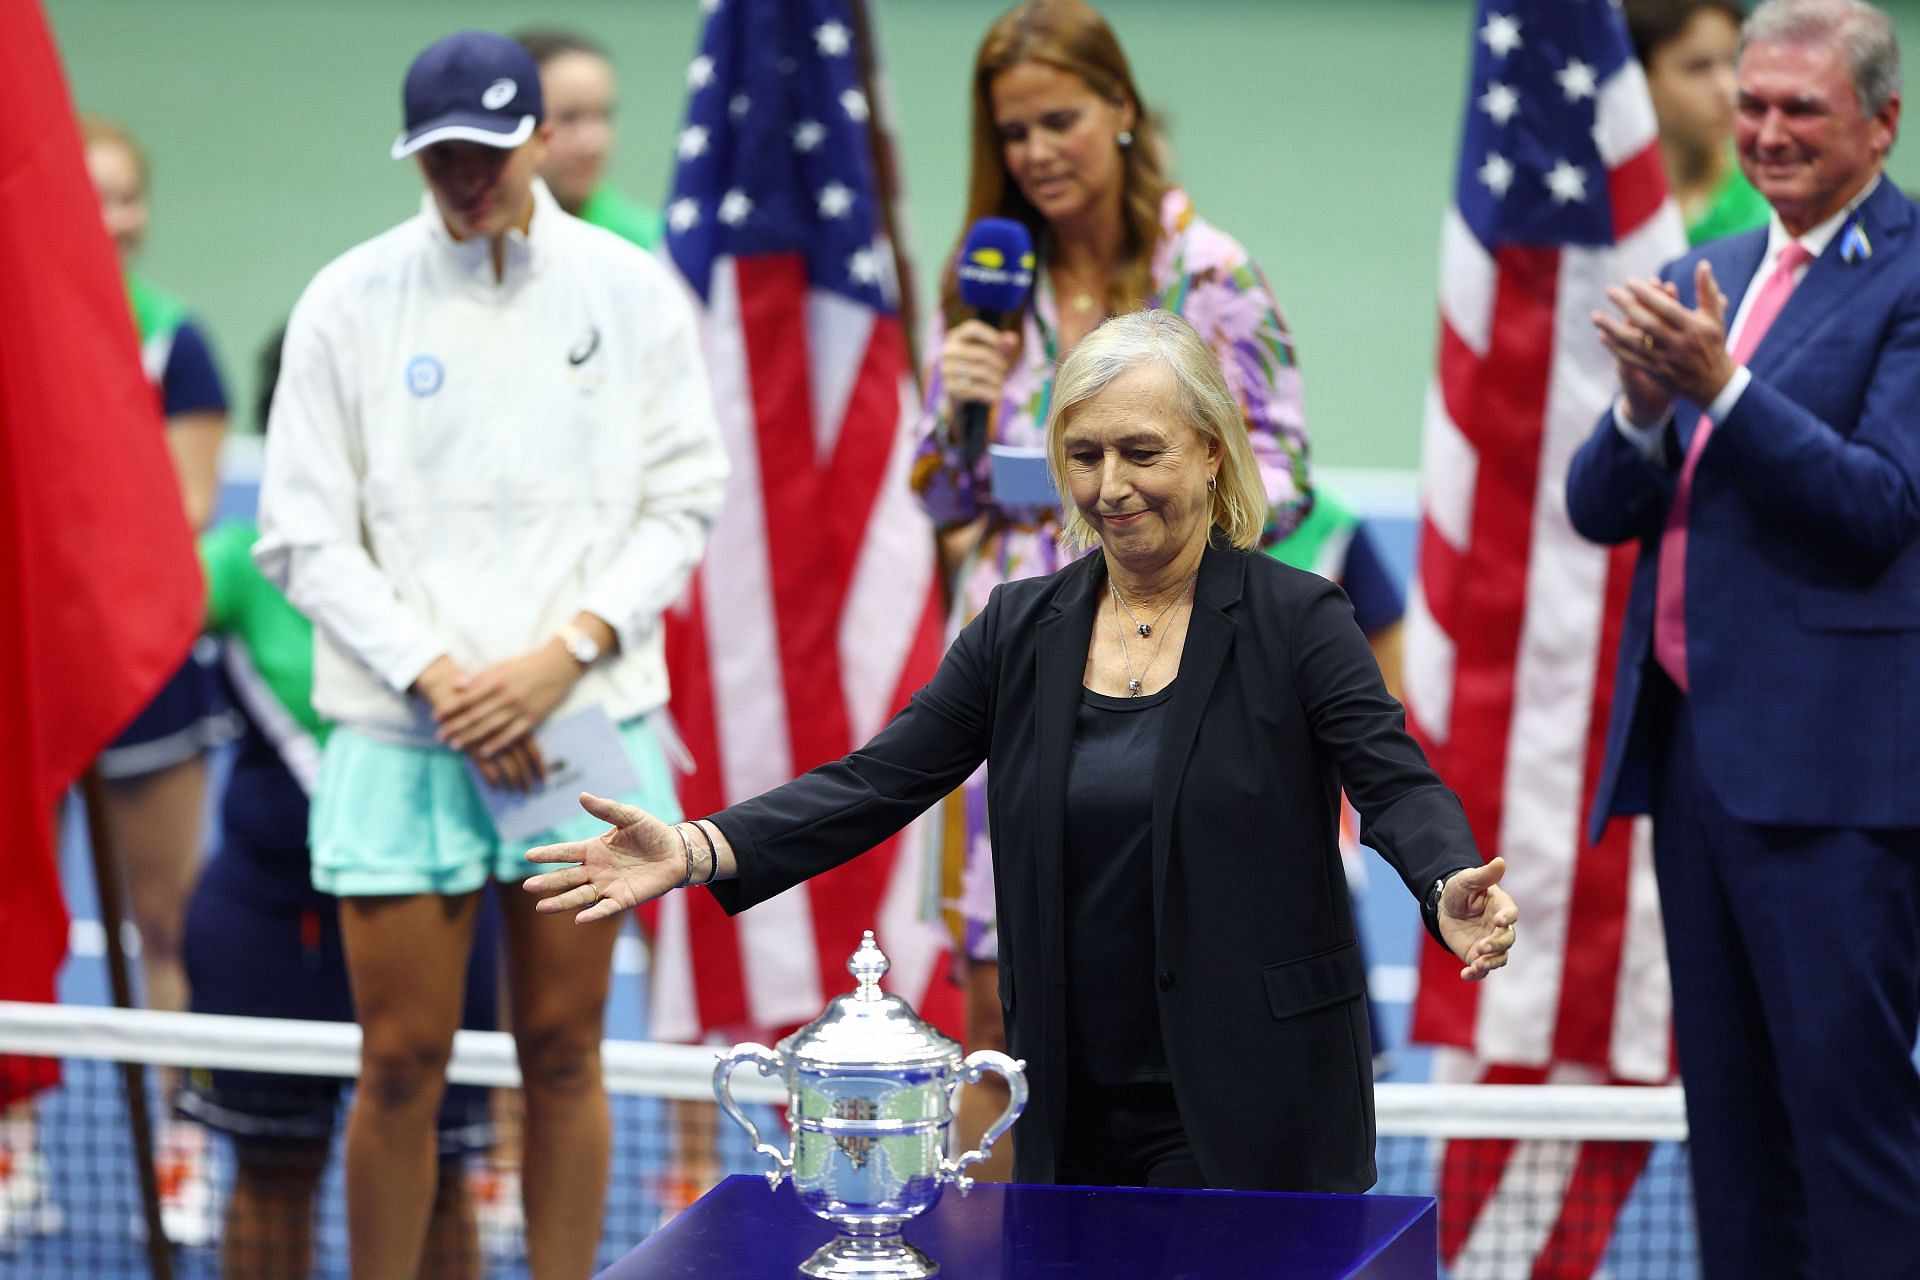 Martina Navratilova presents the championship trophy to Iga Swiatek at the 2022 US Open